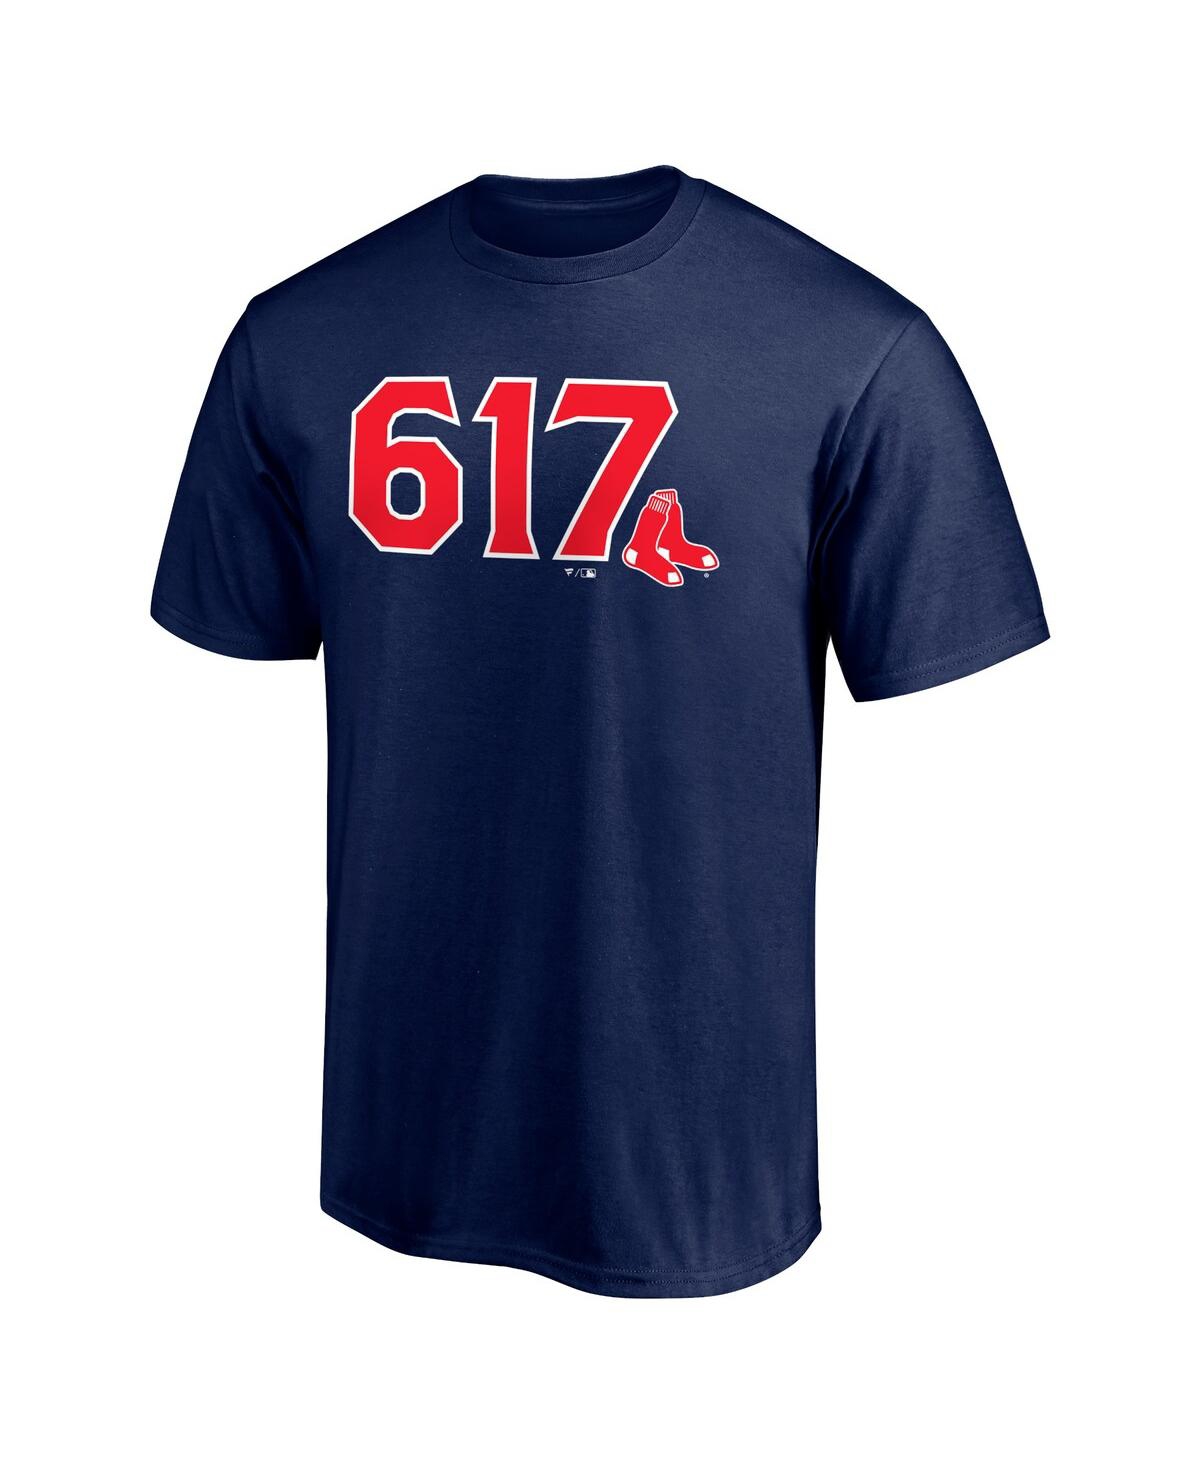 Shop Fanatics Men's  Navy Boston Red Sox Hometown 617 T-shirt